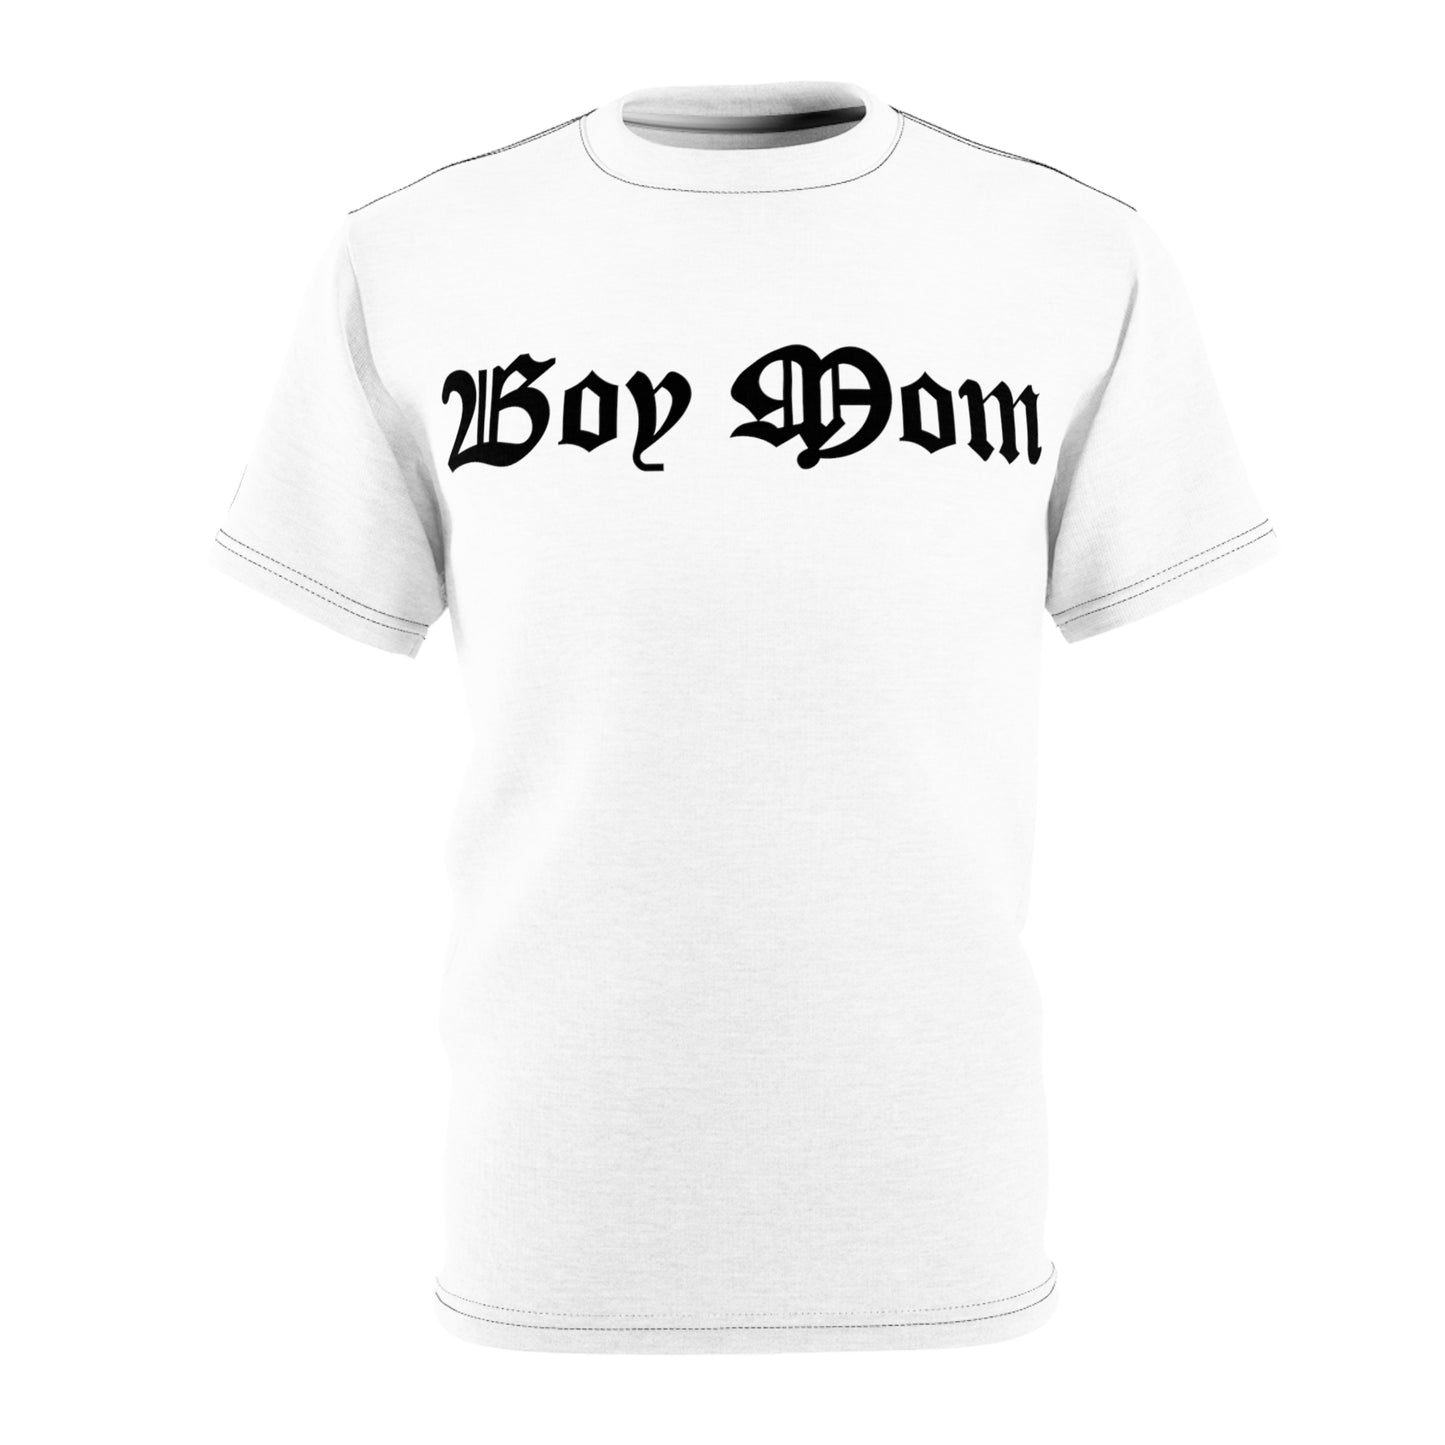 1st Samuel 1:26-28 - 1611 KJV Bible Verse - "Boy Mom" Softstyle T-Shirt